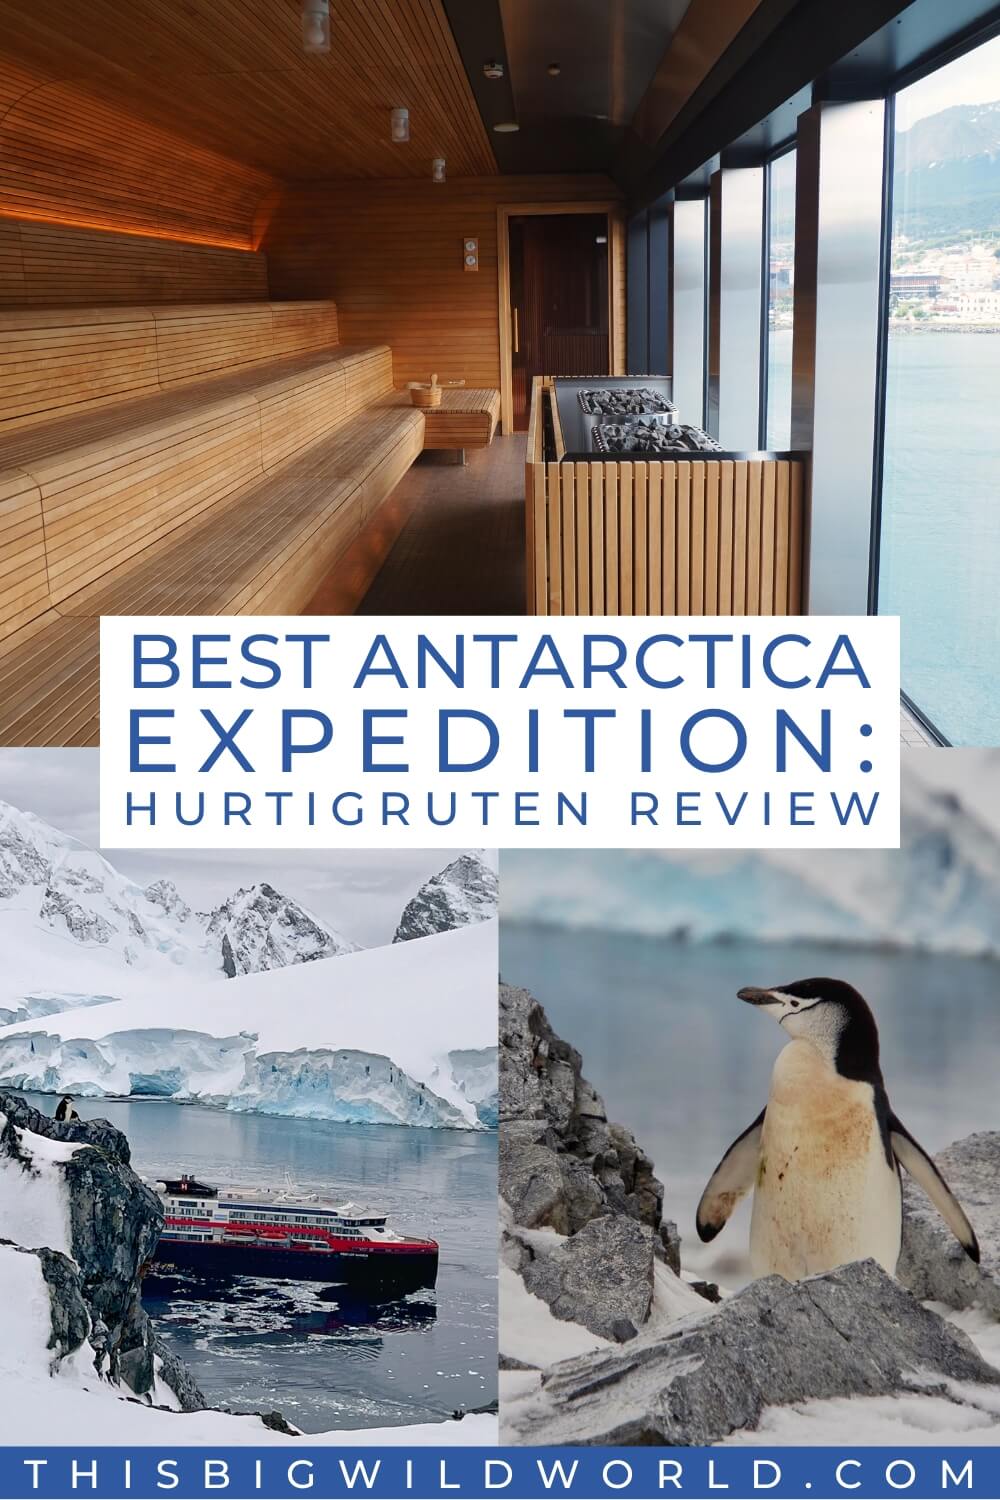 Photos from an Antarctica expedition including a sauna, the cruise ship and a penguin.